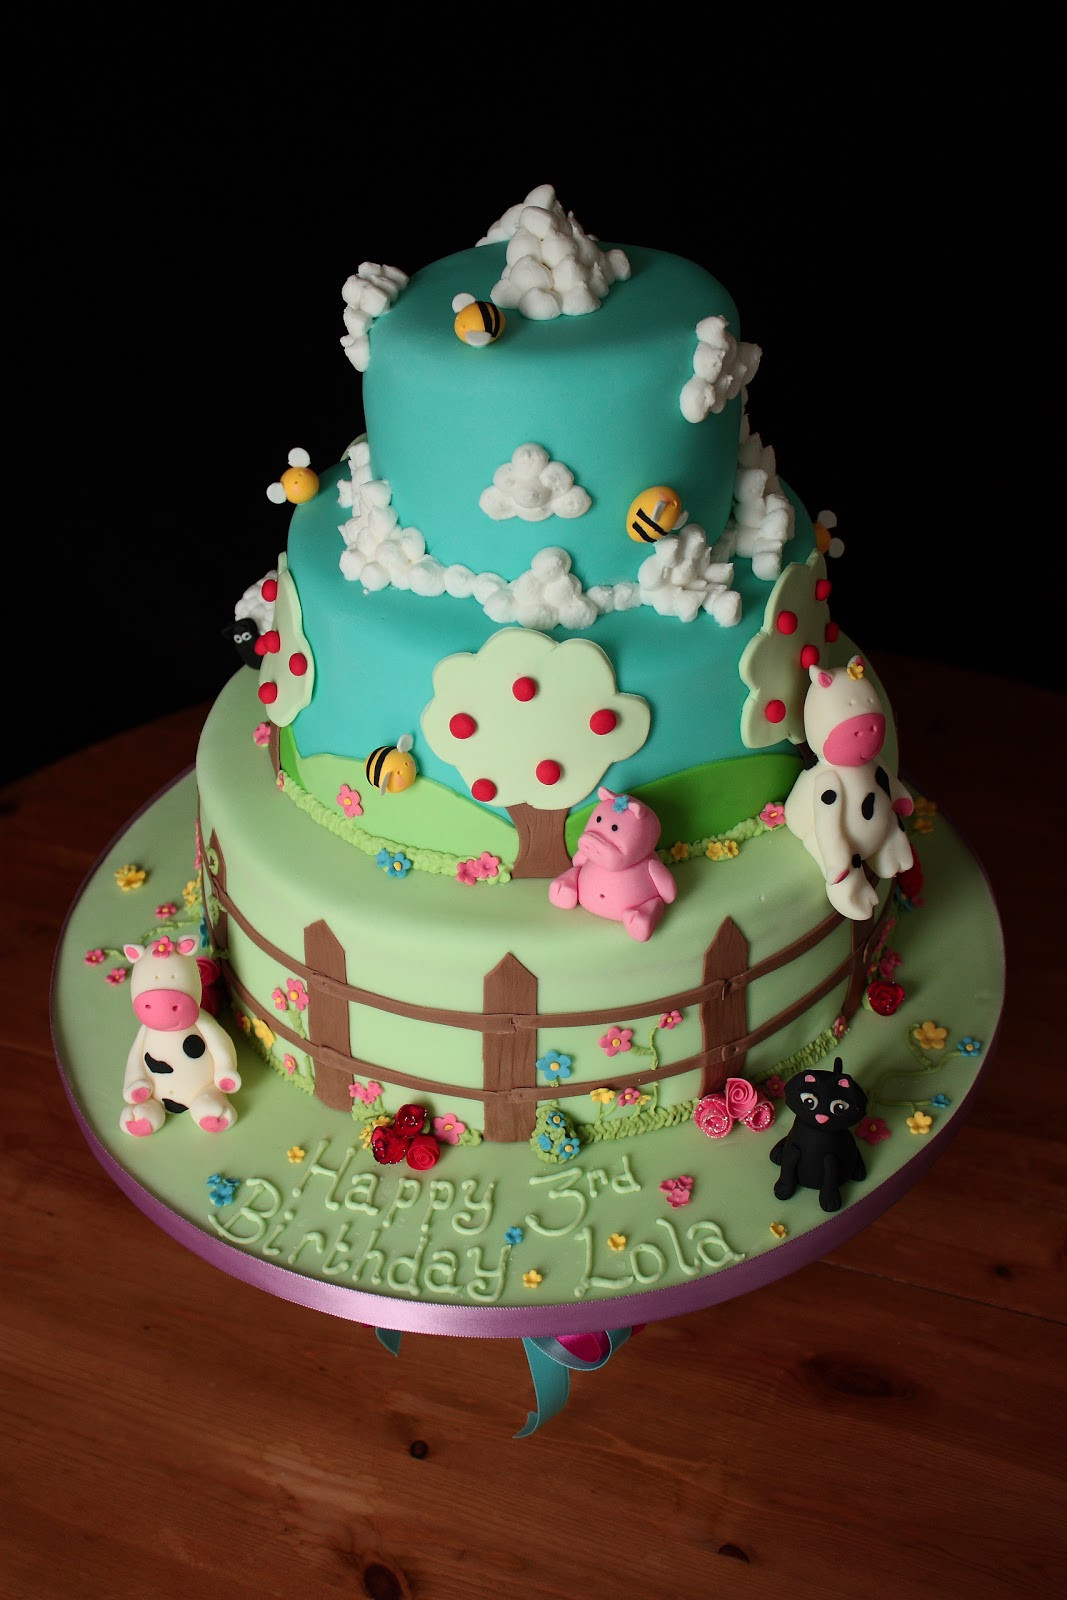 Best ideas about Farm Birthday Cake
. Save or Pin Vanilla Farm Birthday Cake Now.